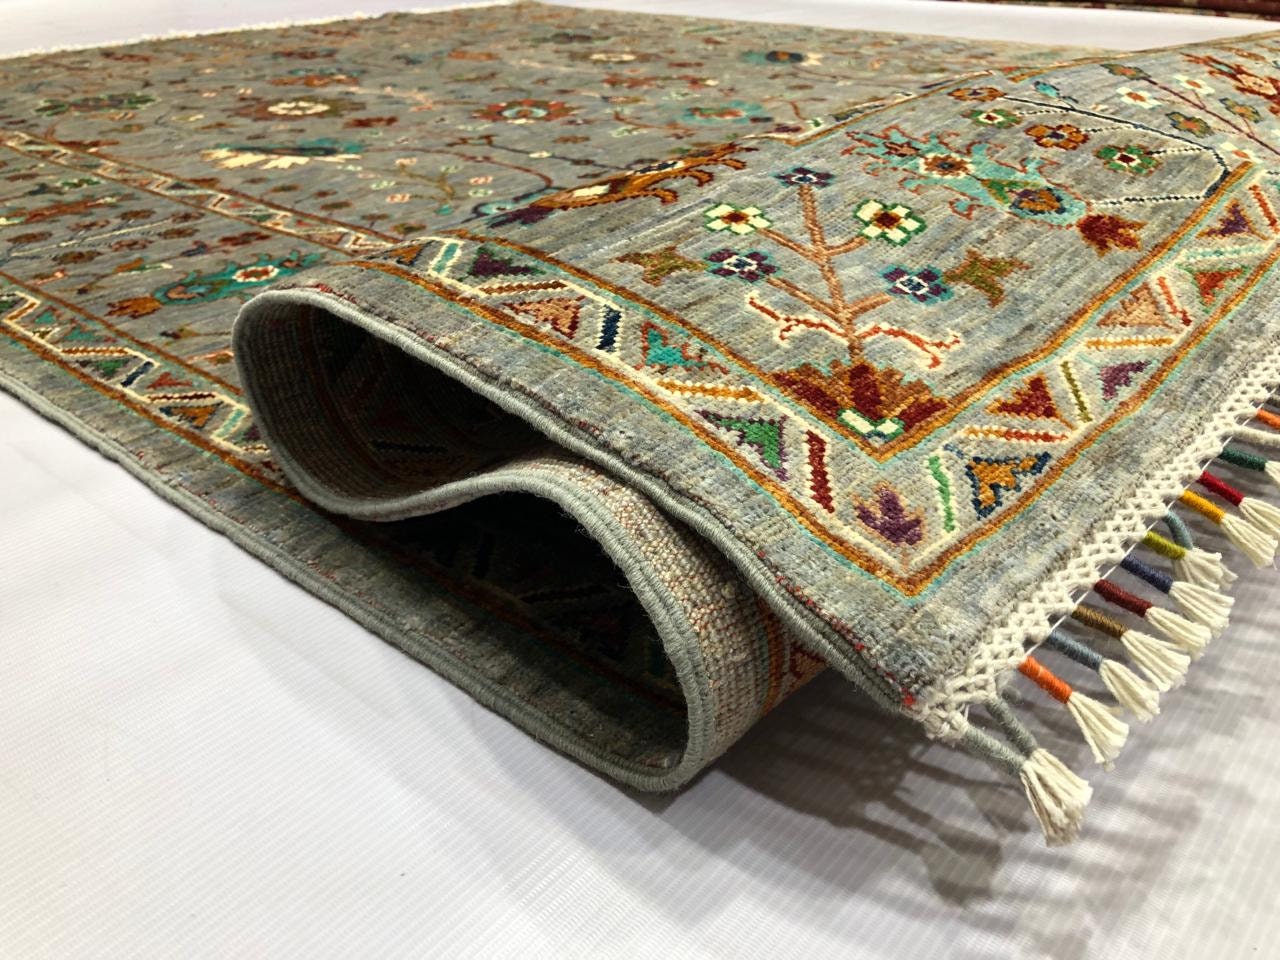 10x7 Feet Top Quality Mamluk Handmade Afghan Rug, Persian Designed from Tribal Ghazni | Living room Carpet, Green Neon Colored